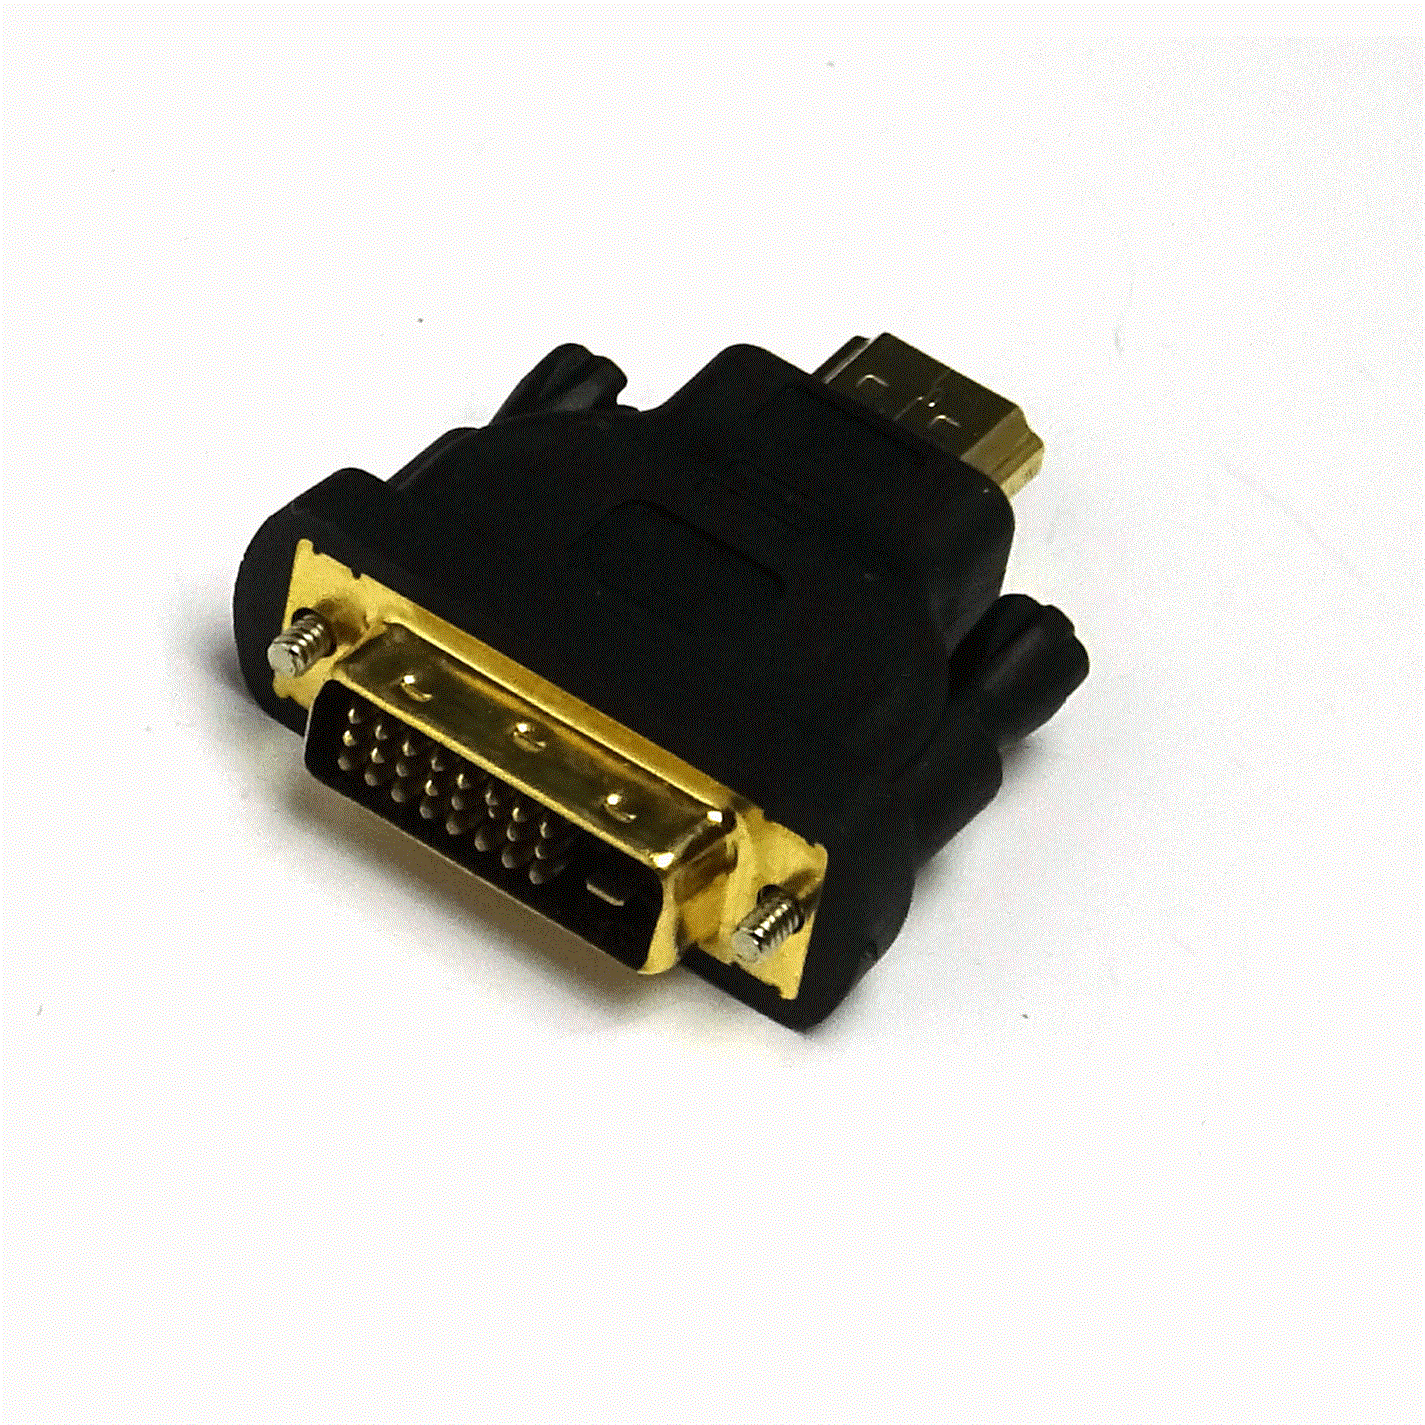 HDMI to DVI-D Male Converter Adaptor Gold Plated Gender Changer HDTV - UK Seller